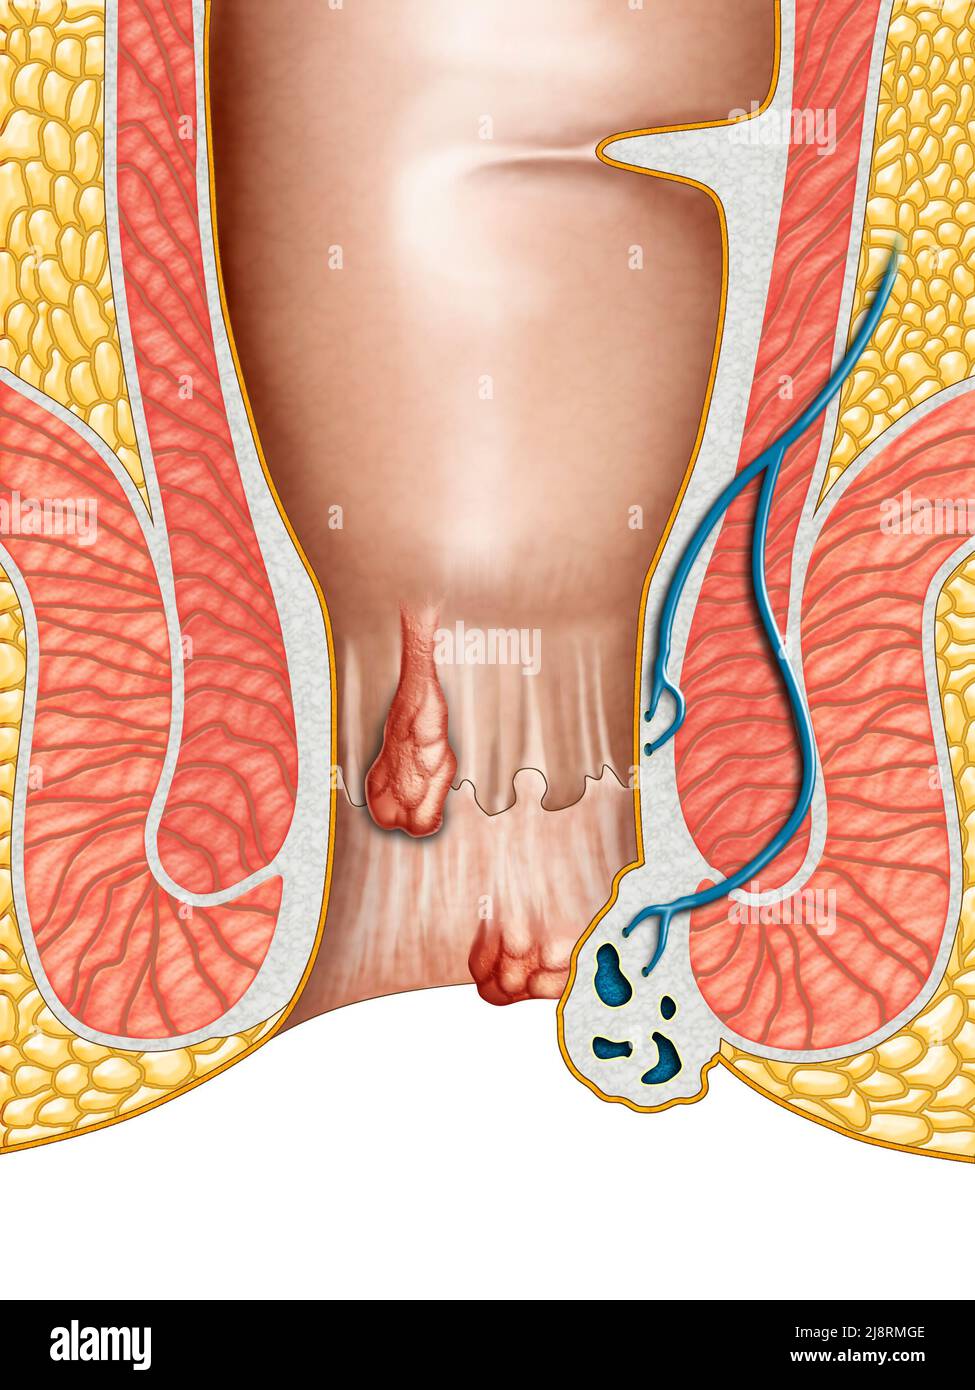 Anatomical drawing showing internal and external hemorrhoids. Digital illustration. Stock Photo